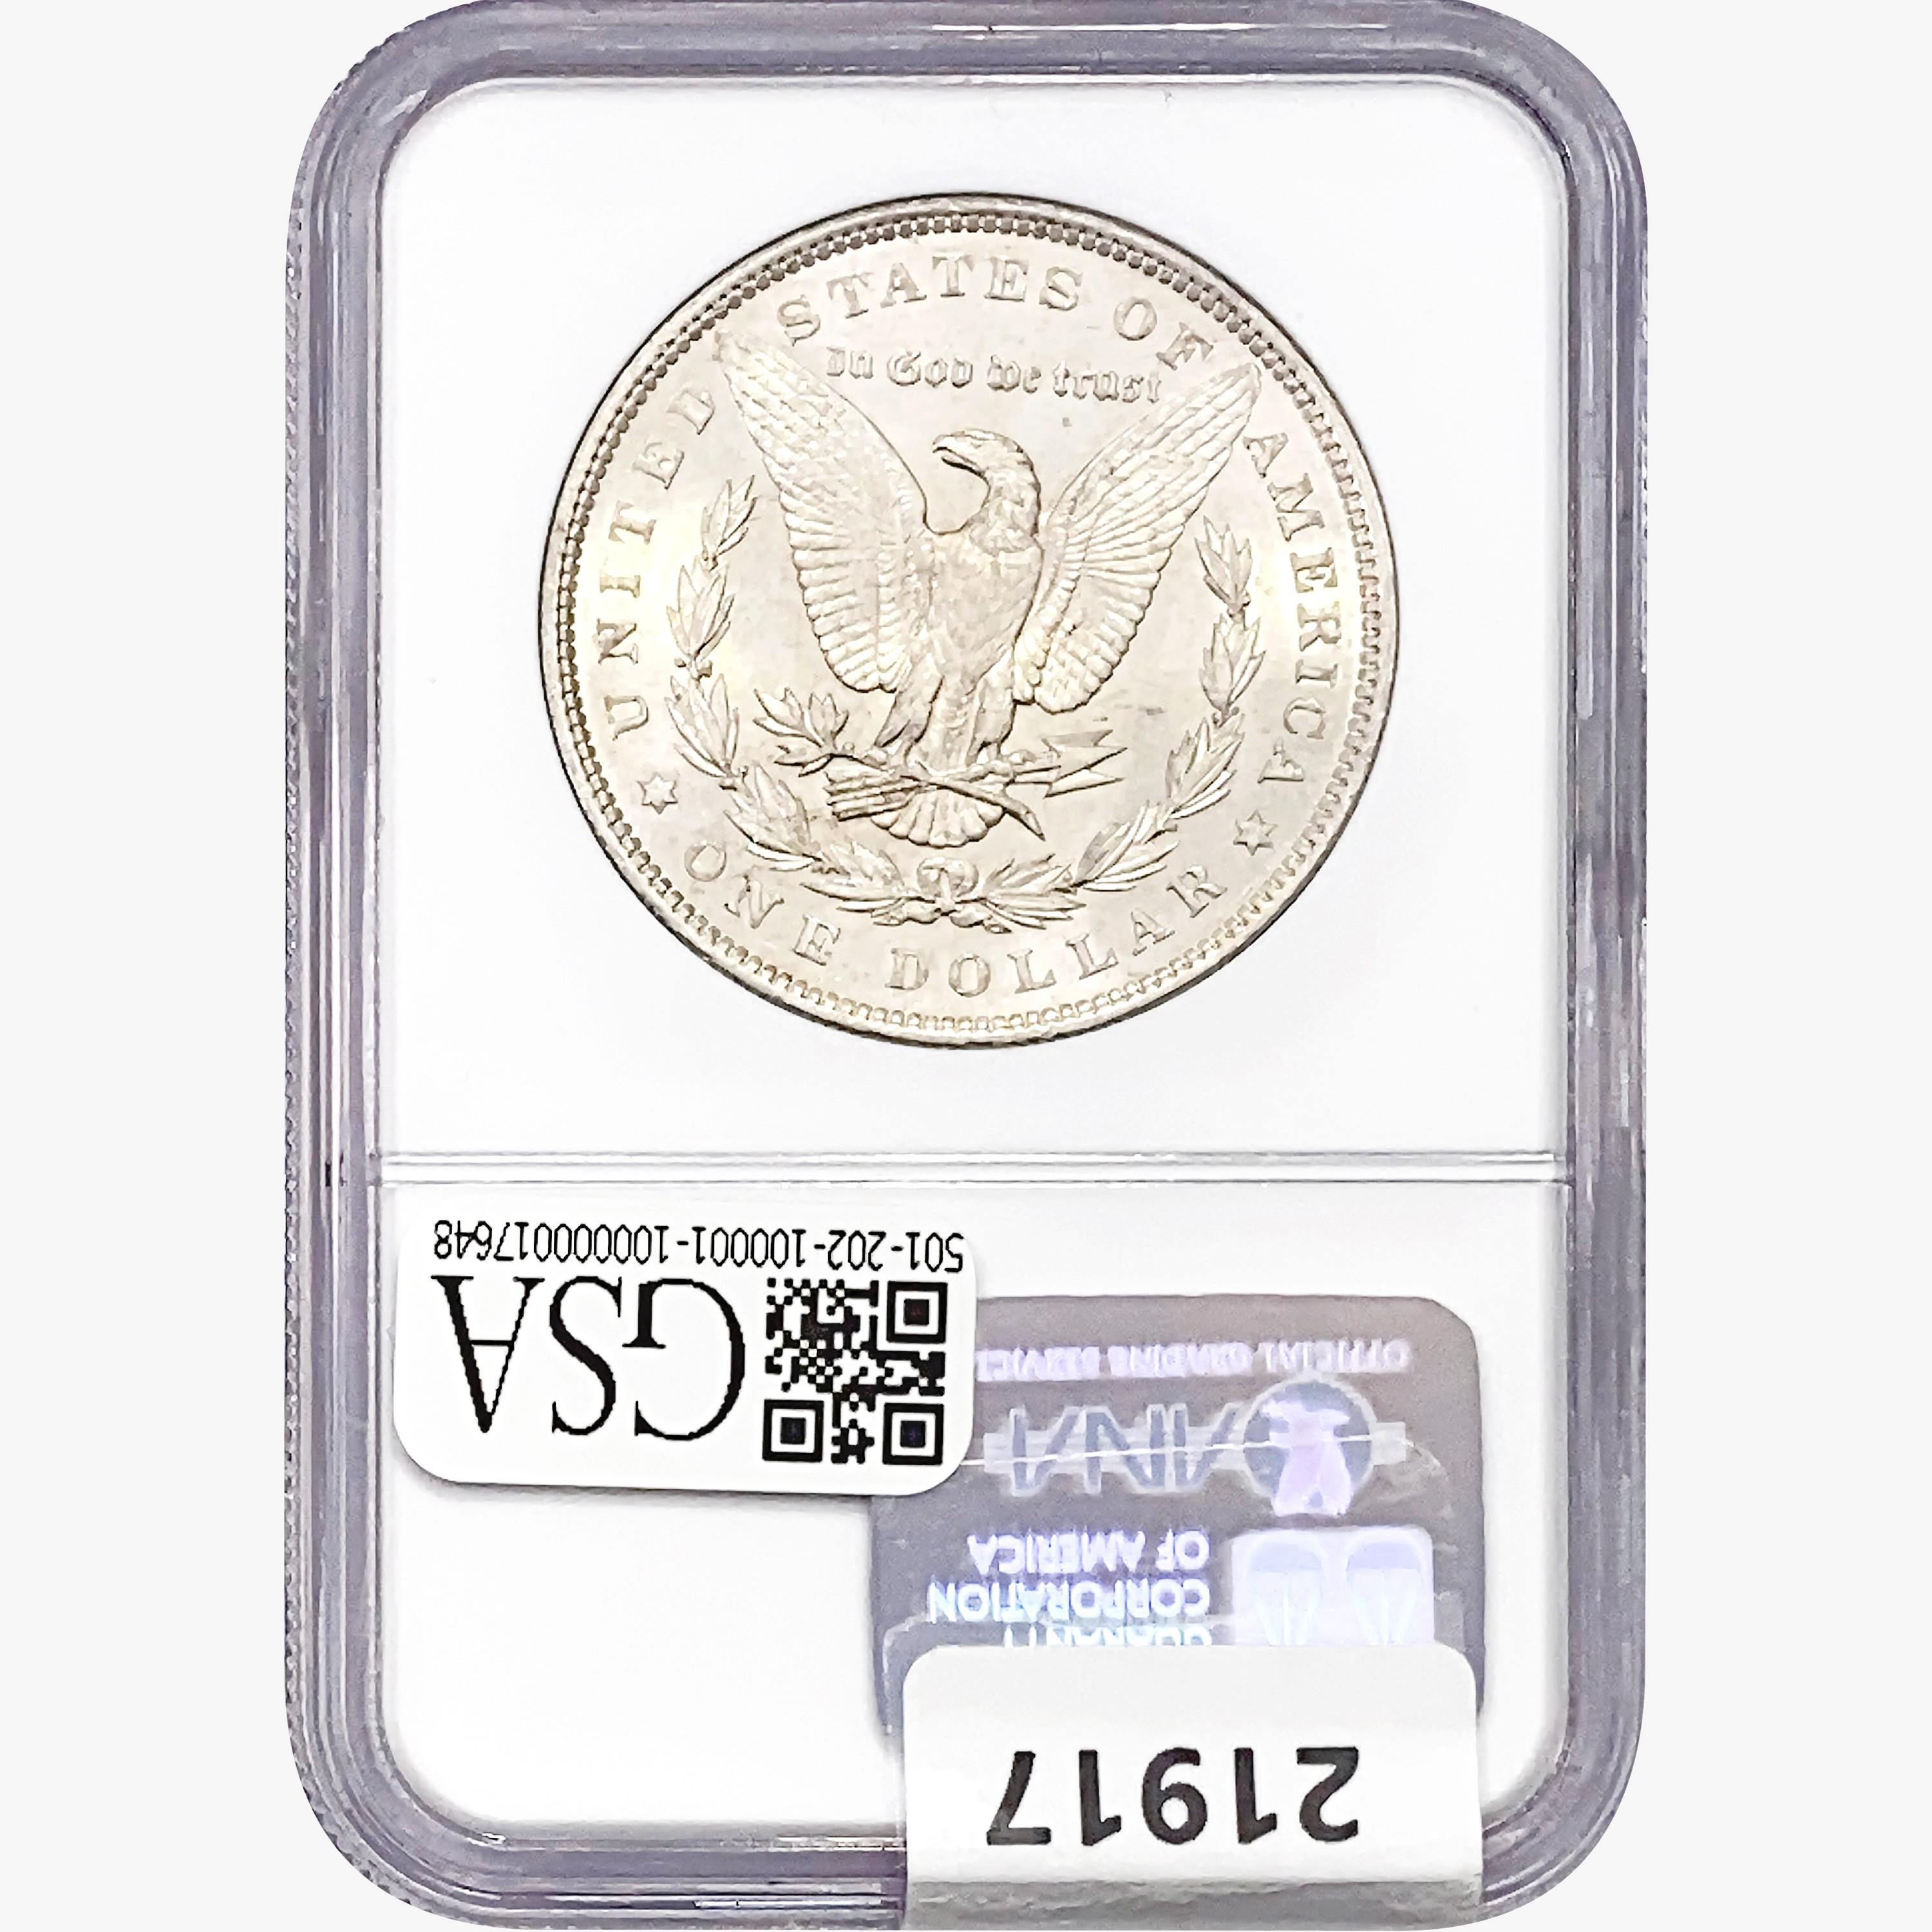 1896 Morgan Silver Dollar NGC MS64